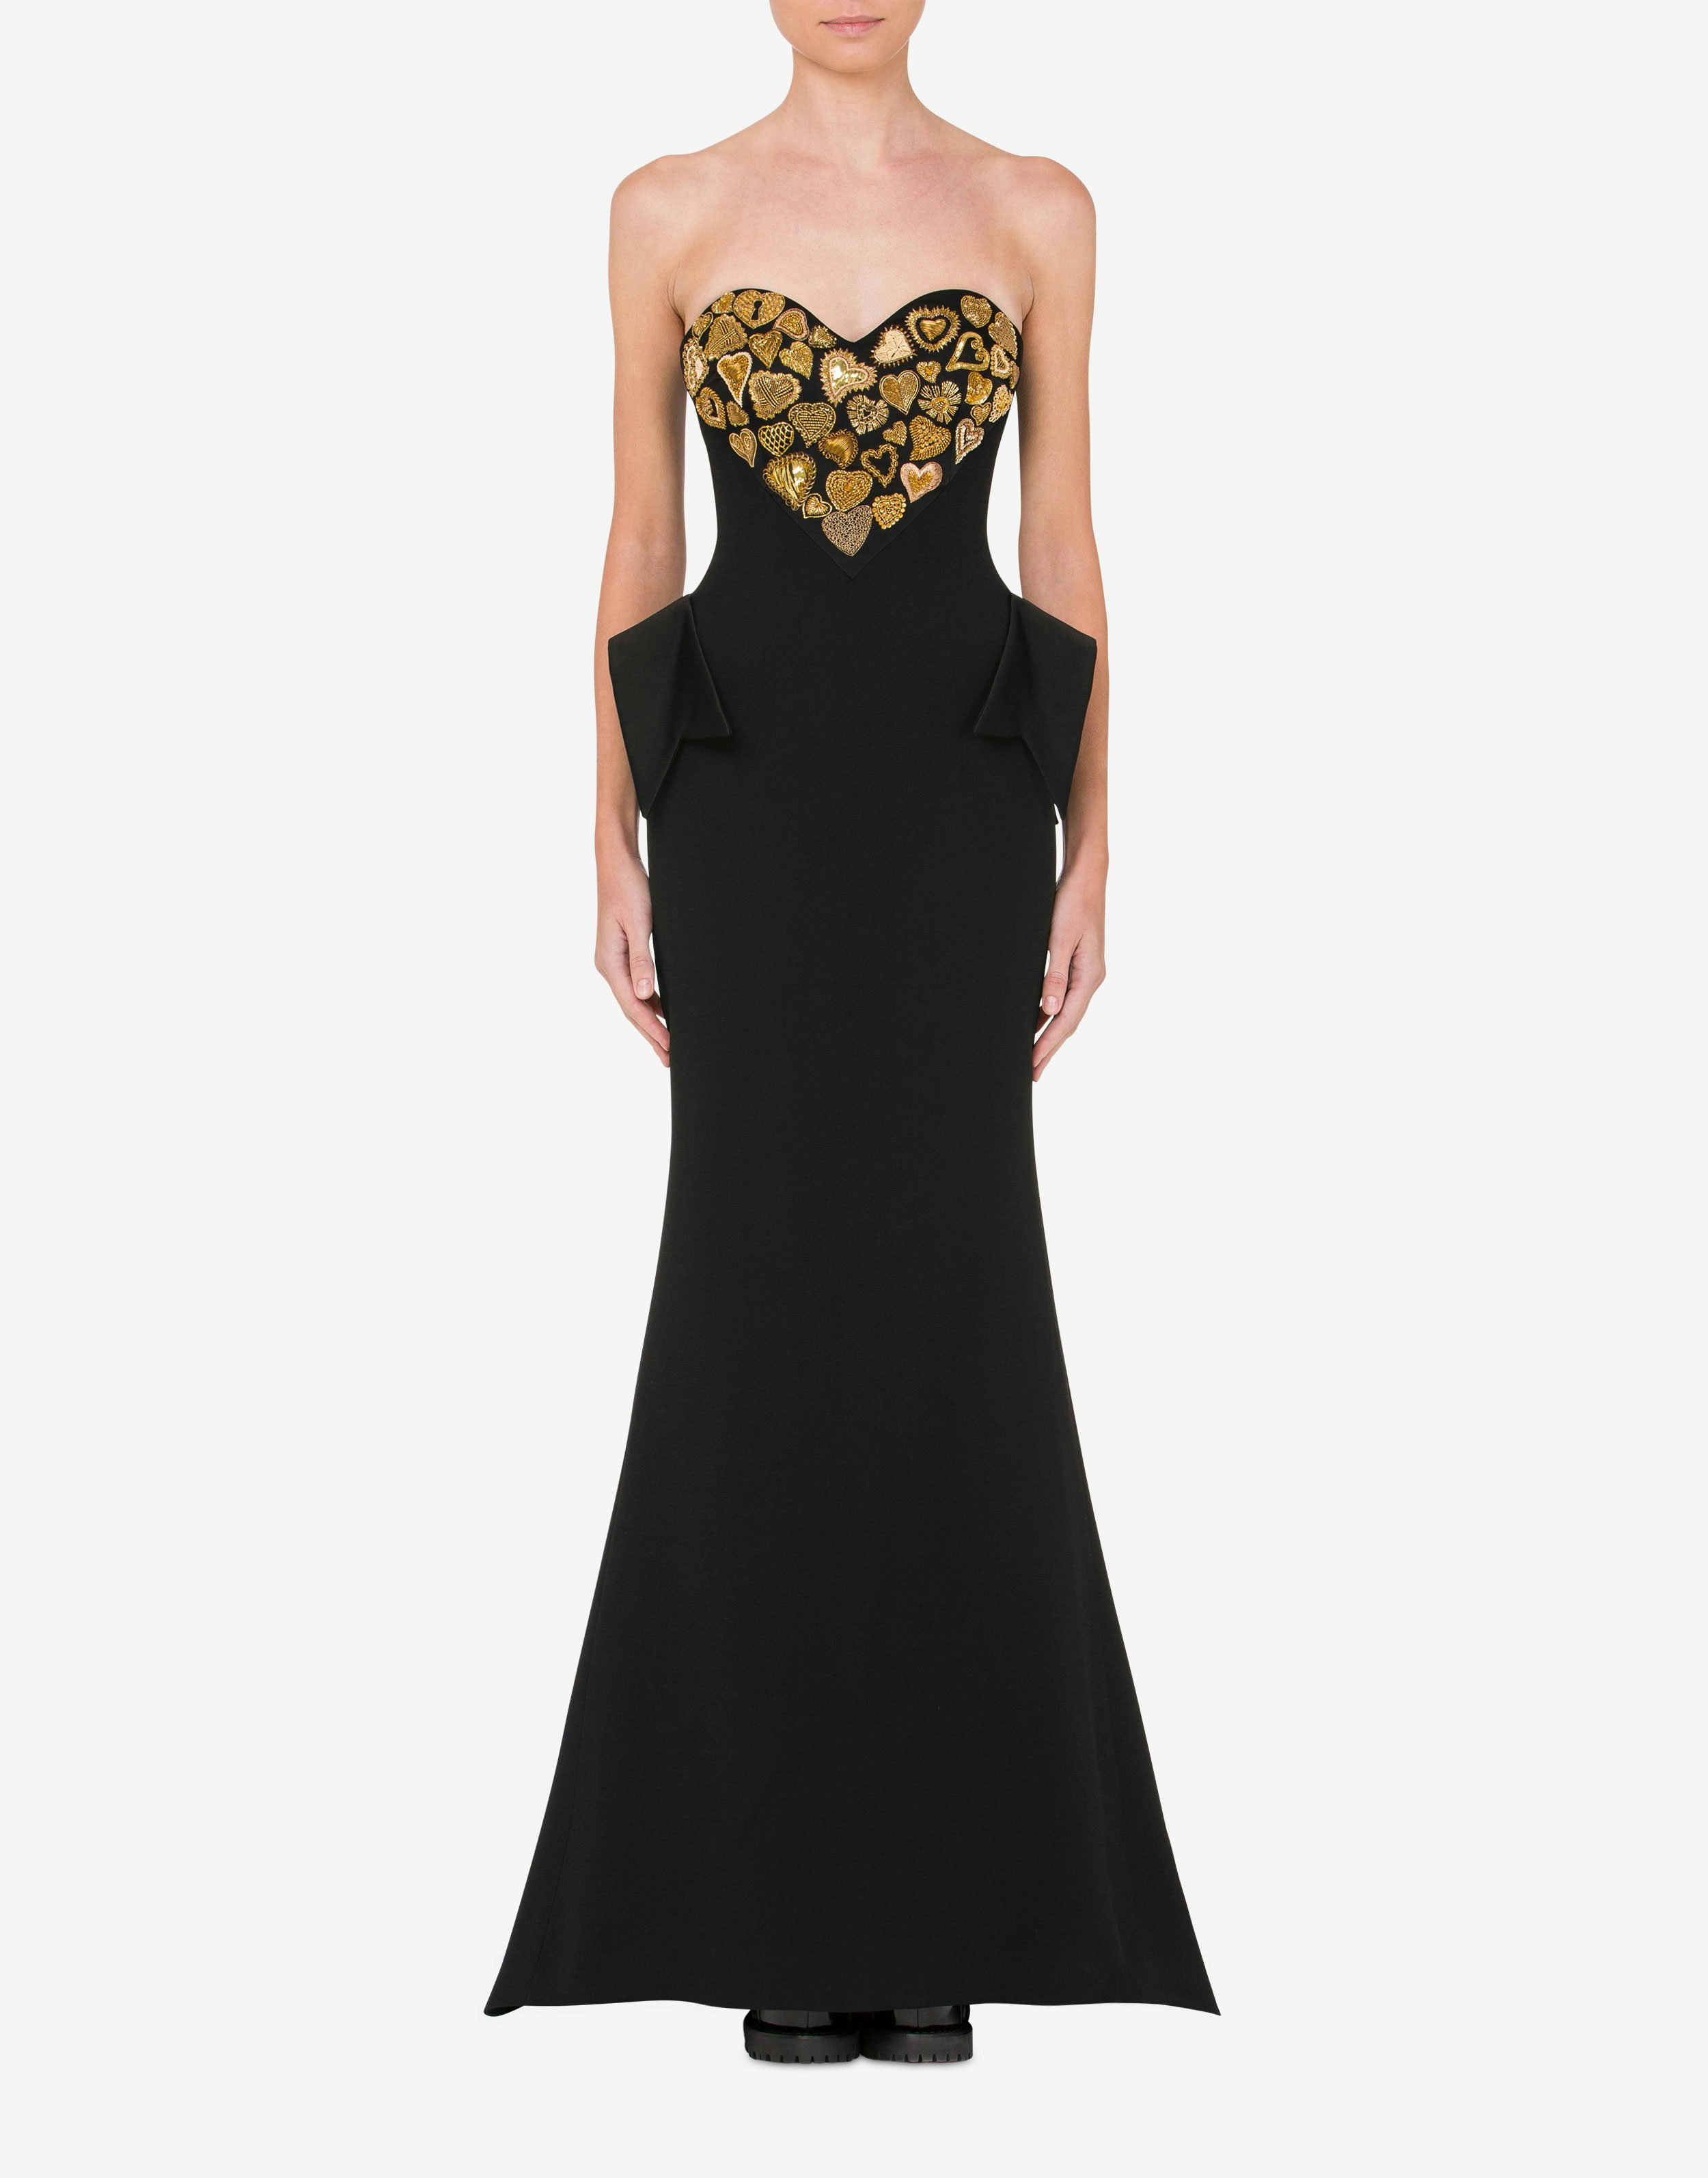 Embellished Hearts corset dress 0